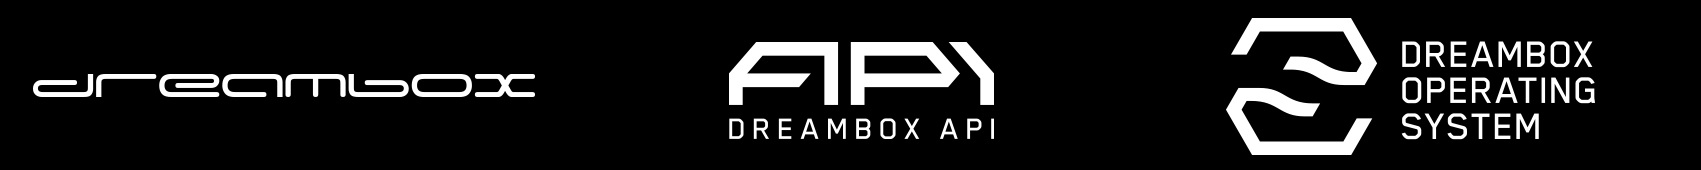 Dreambox operating system Dreambox API